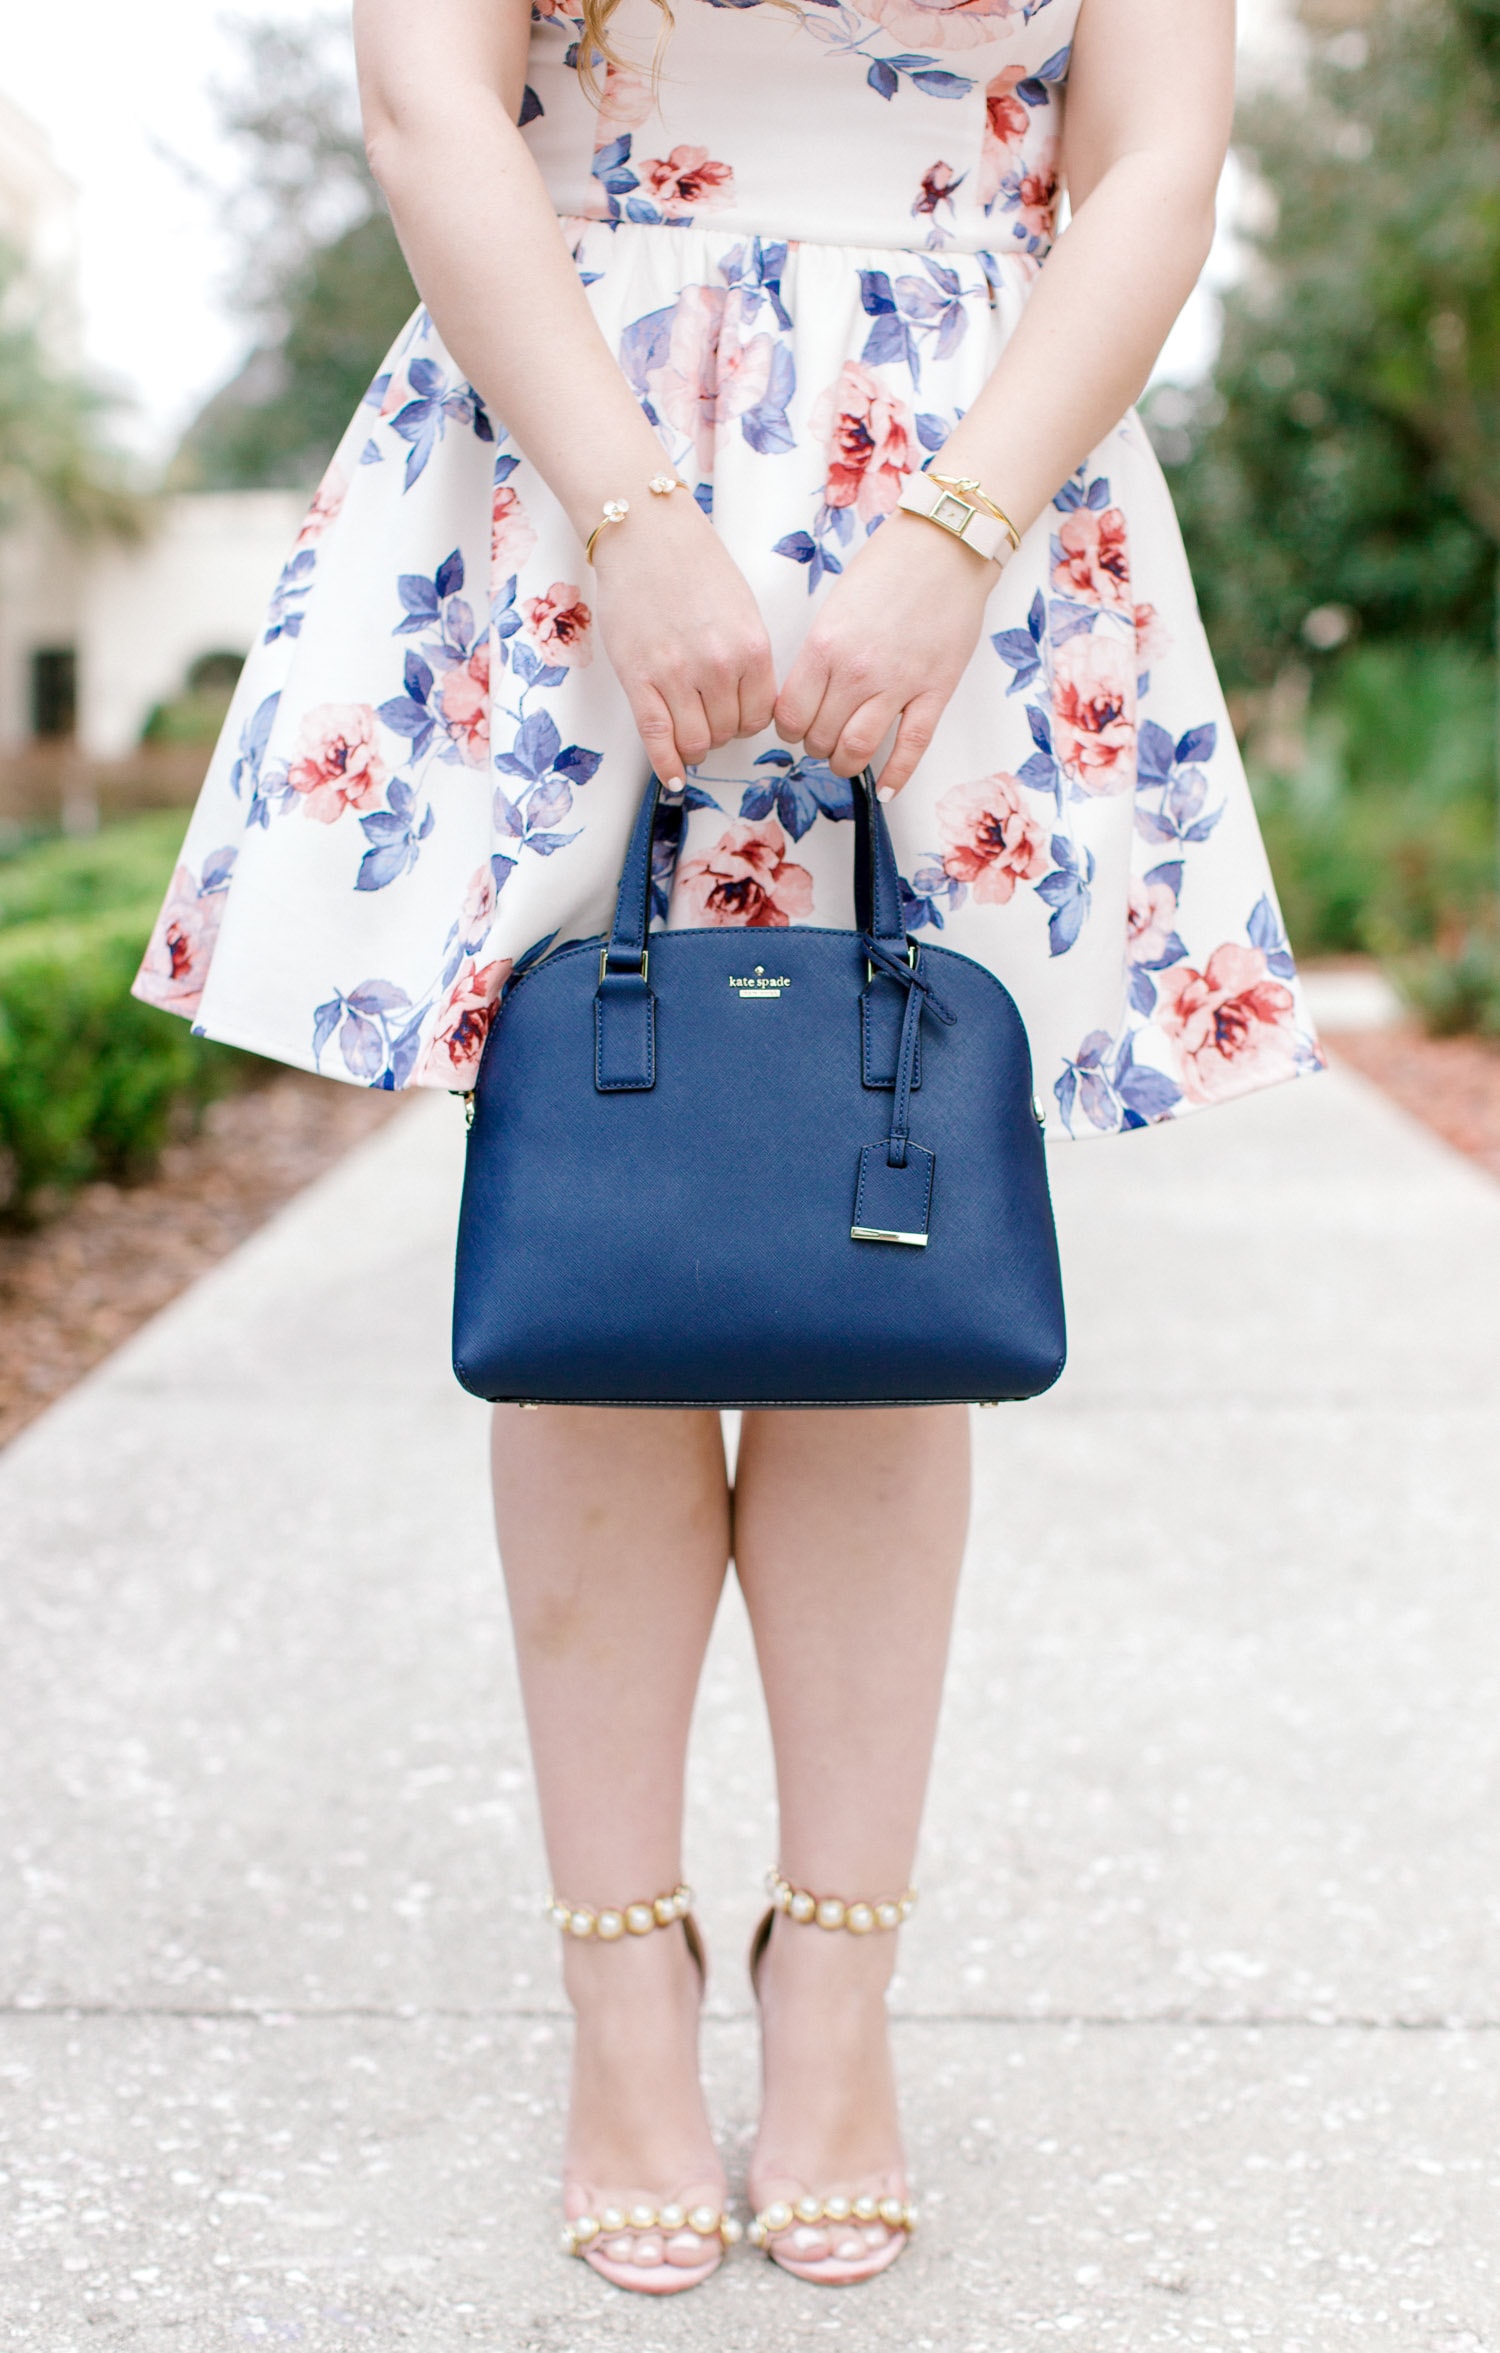 The Best of the Kate Spade sale | Kate Spade sale| floral dress | blue bag | Ashley Brooke Nicholas